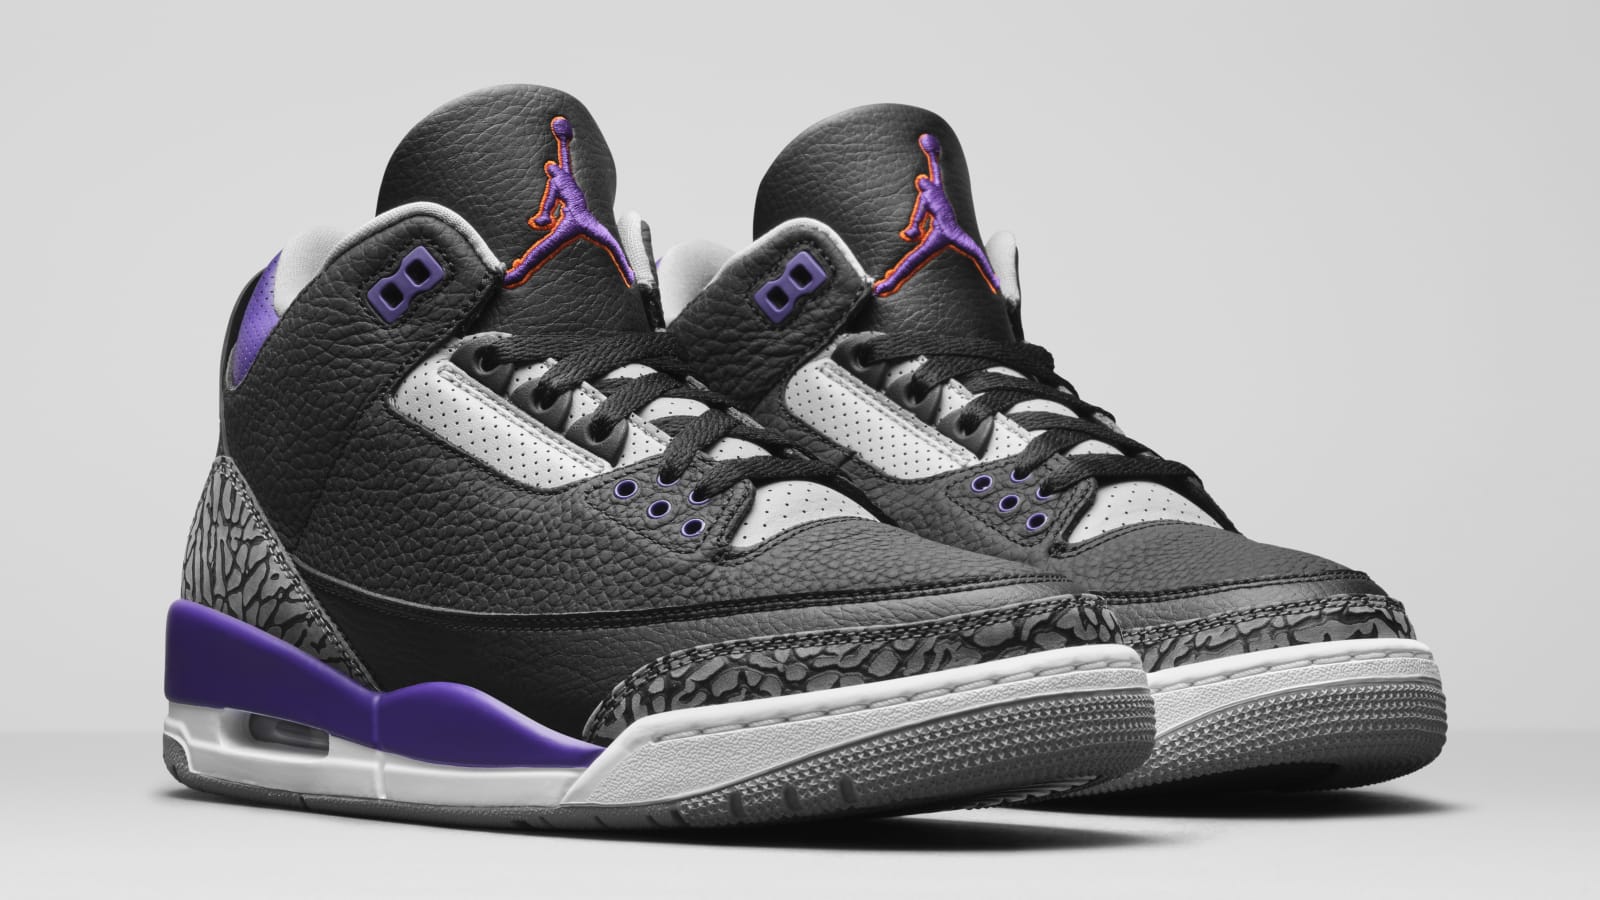 Air Jordan 3 "Court Purple" Coming Soon: Official Photos